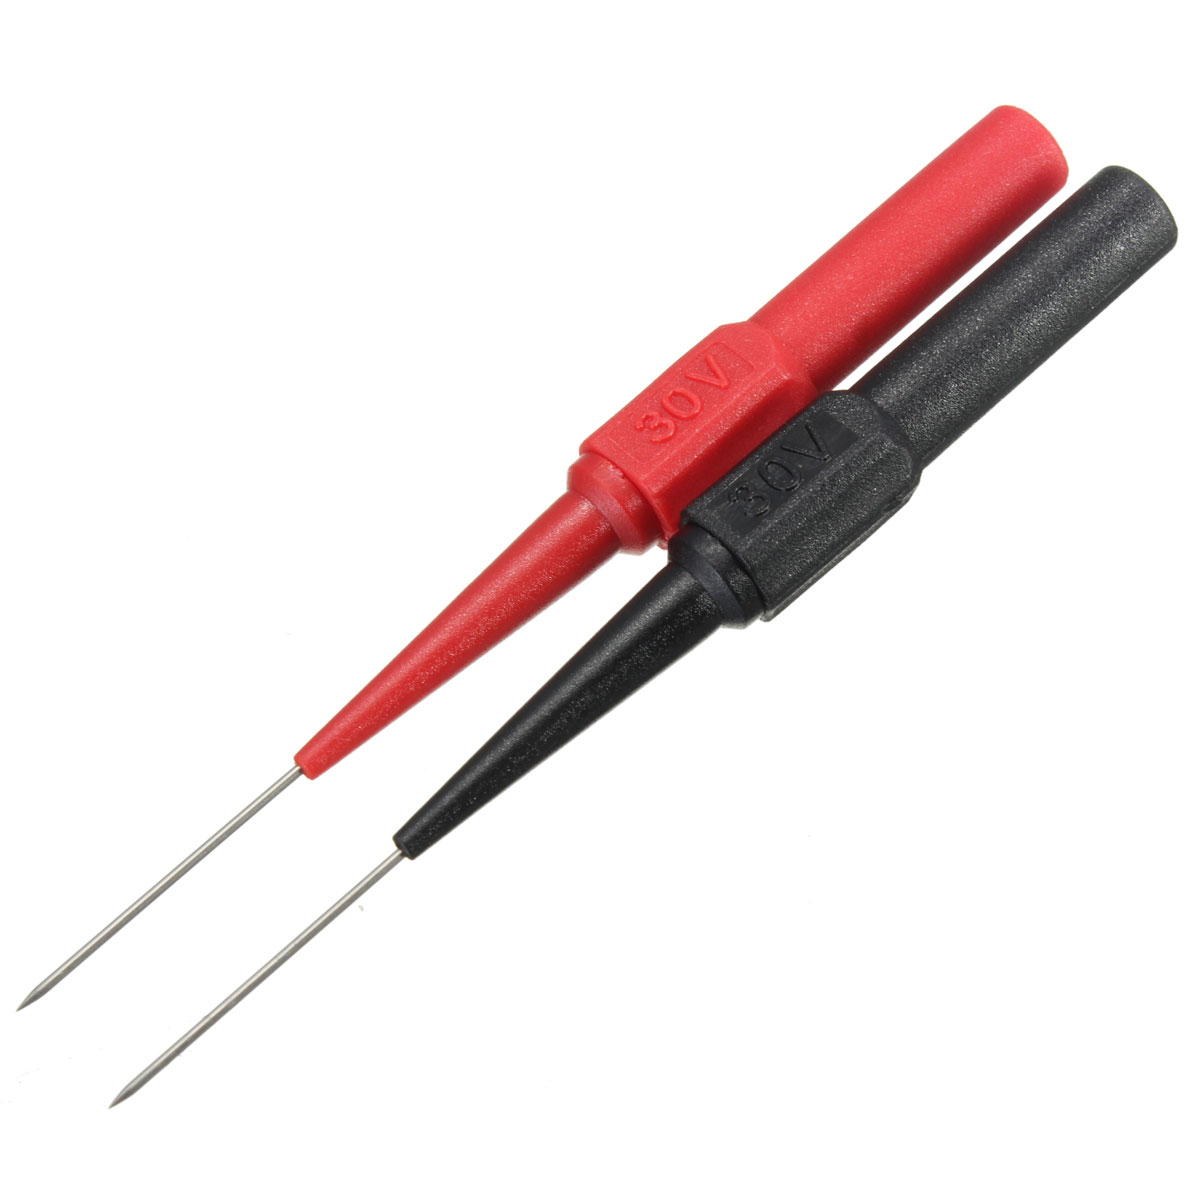 3pcs-DANIU-Insulation-Piercing-Needle-Non-destructive-Multimeter-Test-Probe-RedBlack-1402567-2